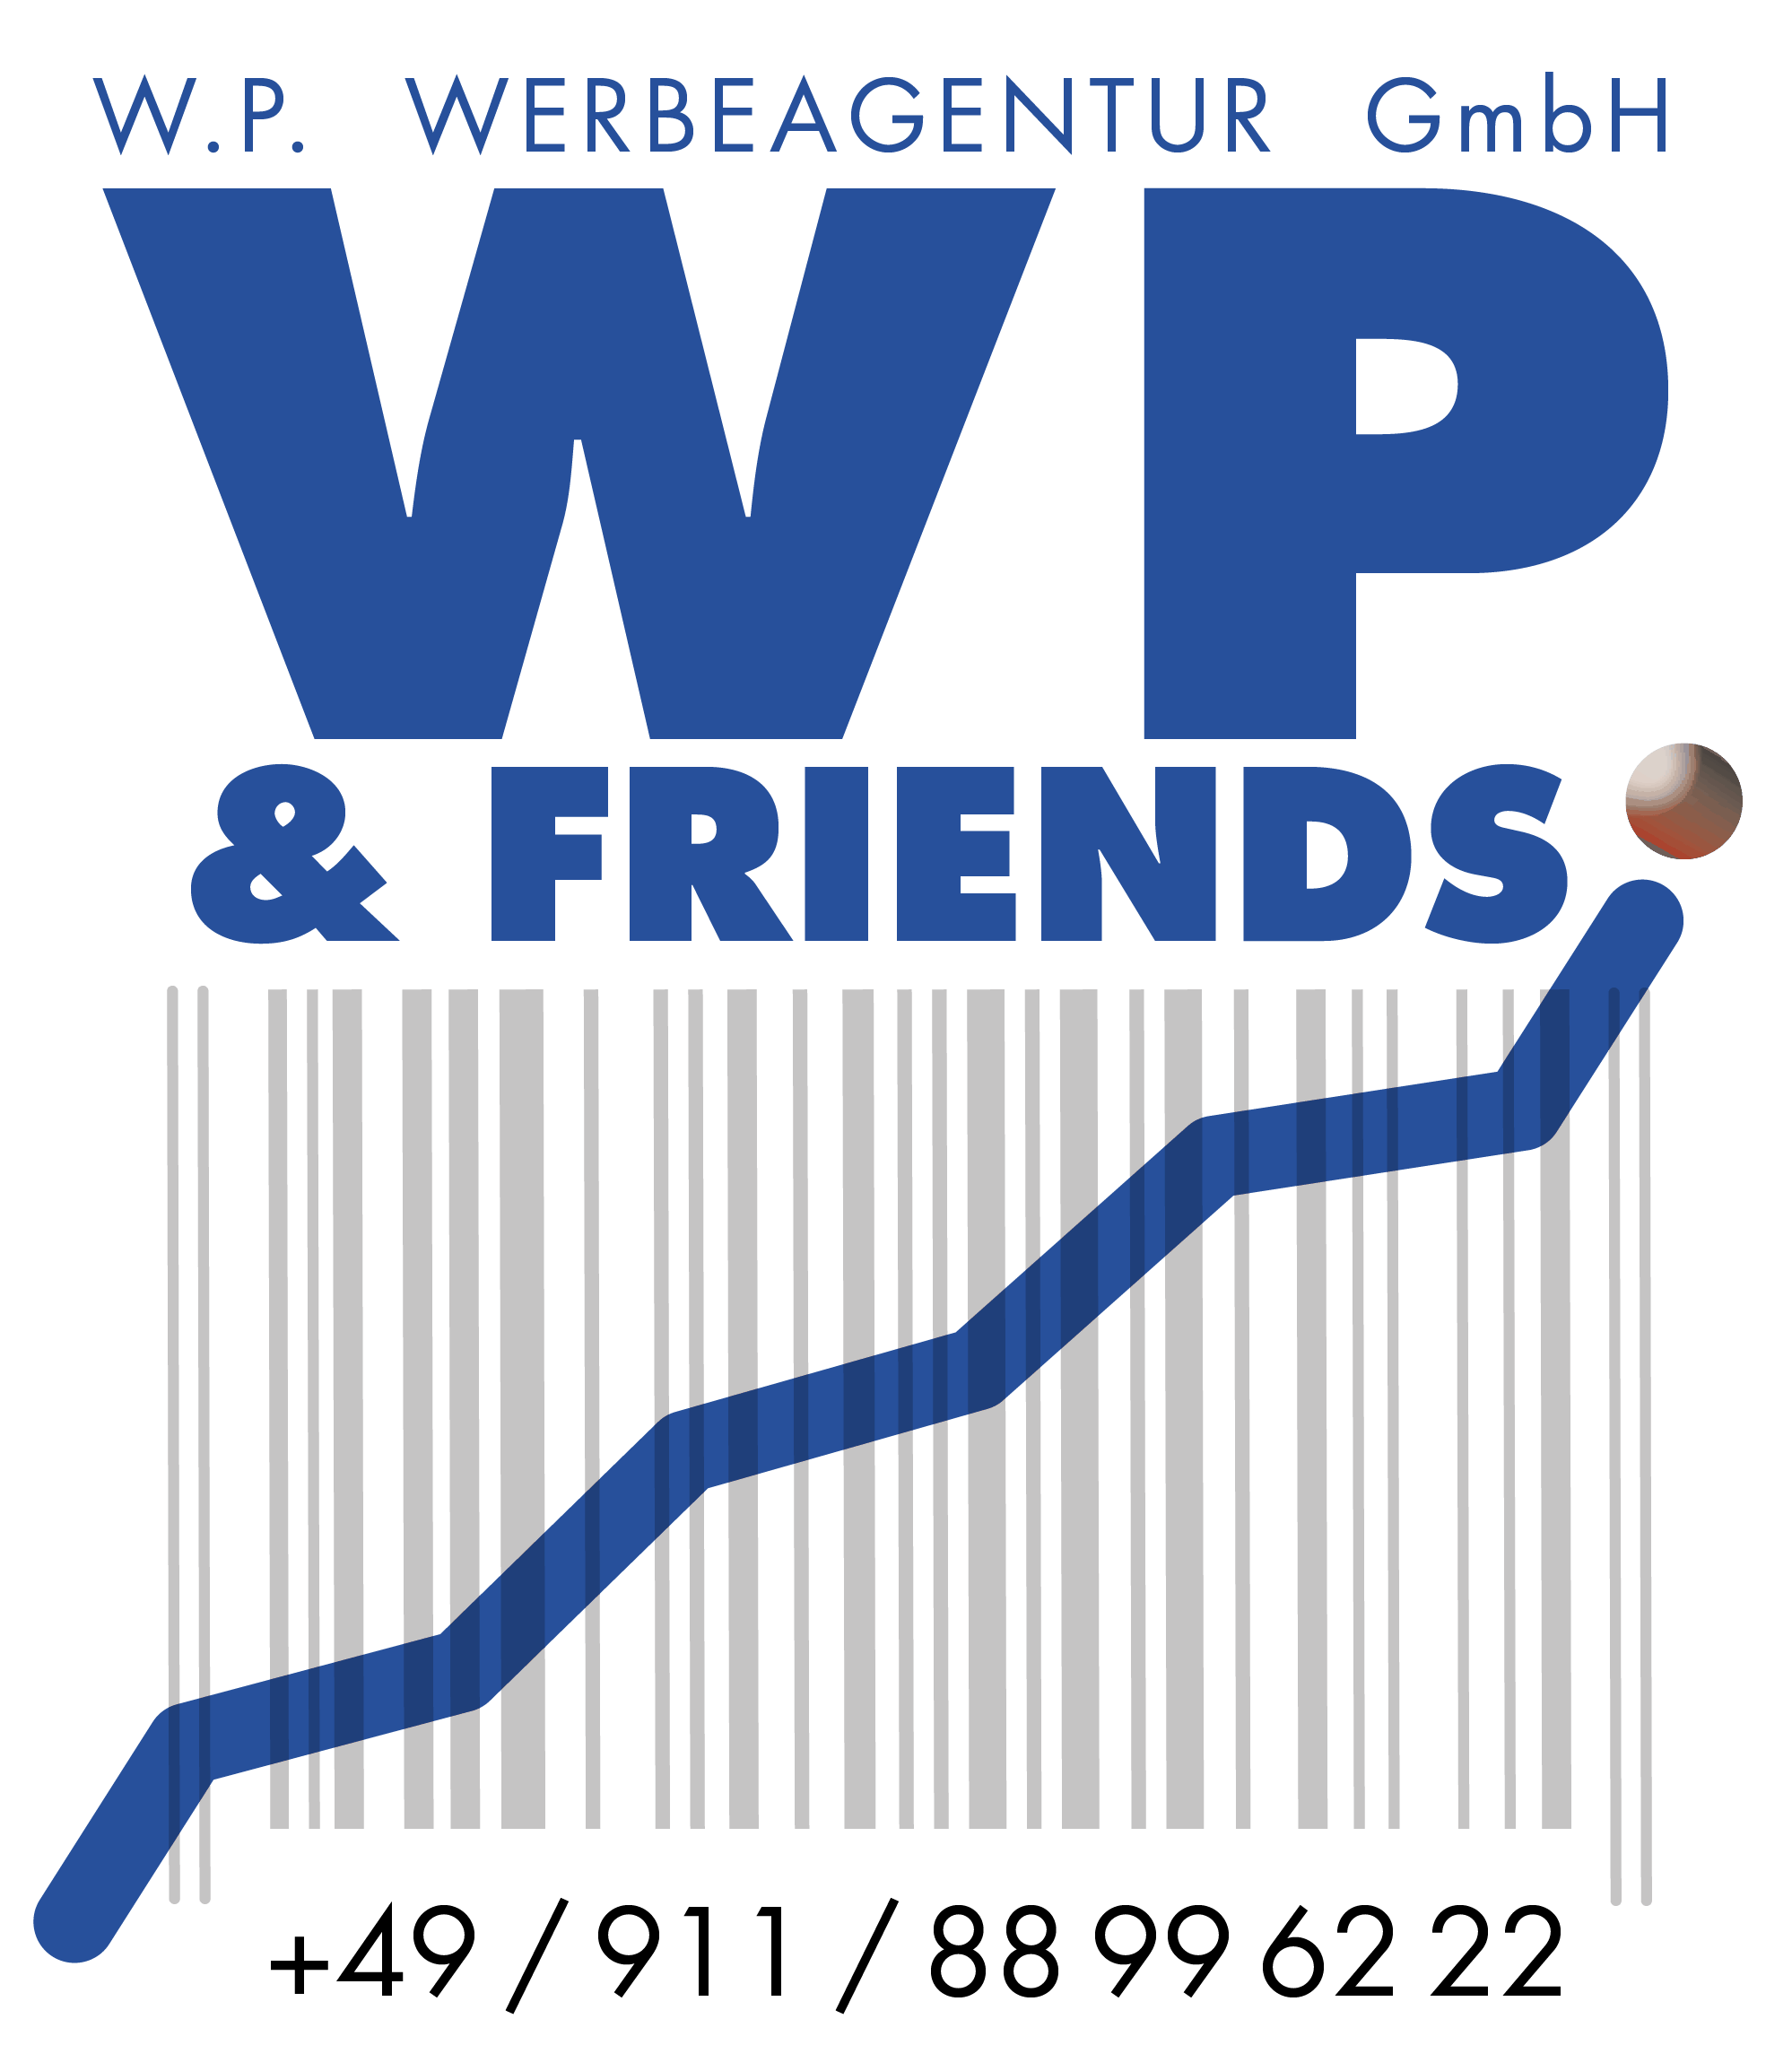 W.P. & FRIENDS Logo